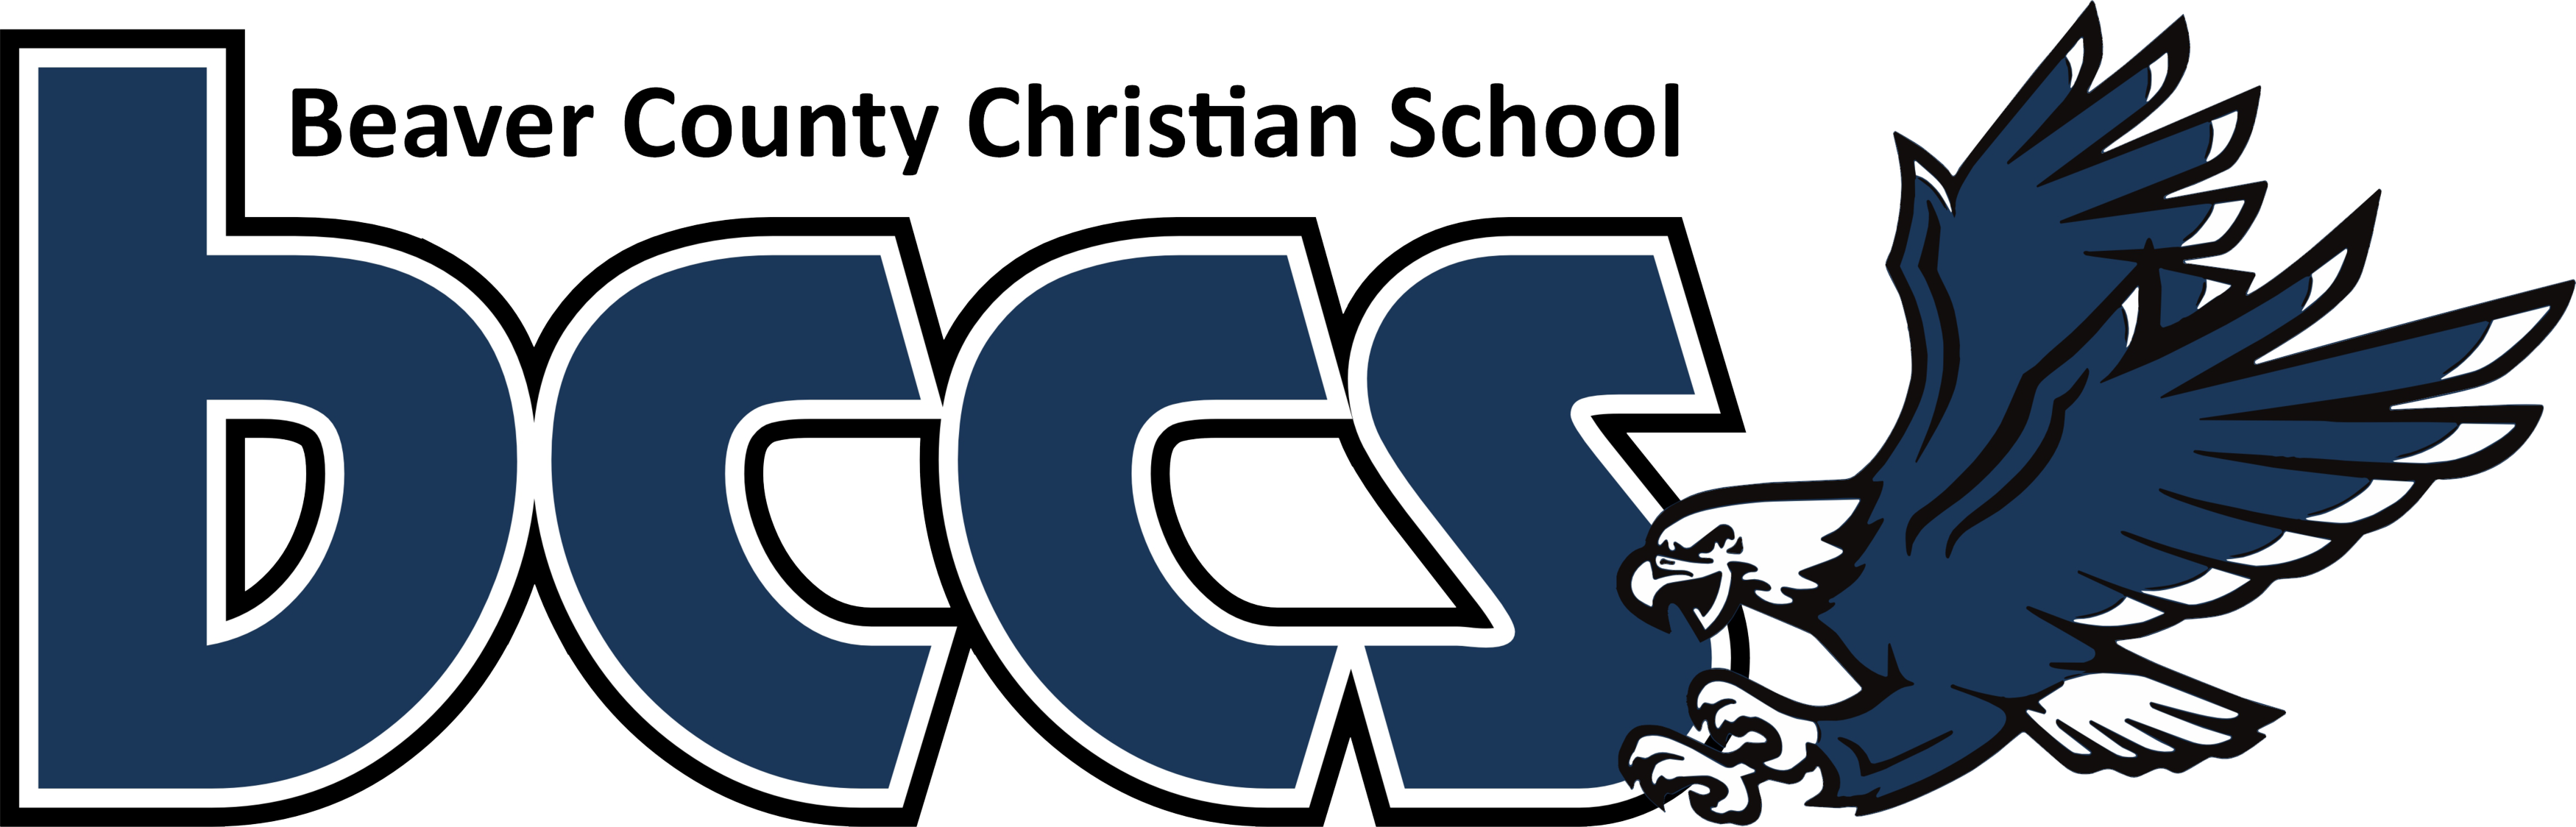 Footer Logo for Beaver County Christian School